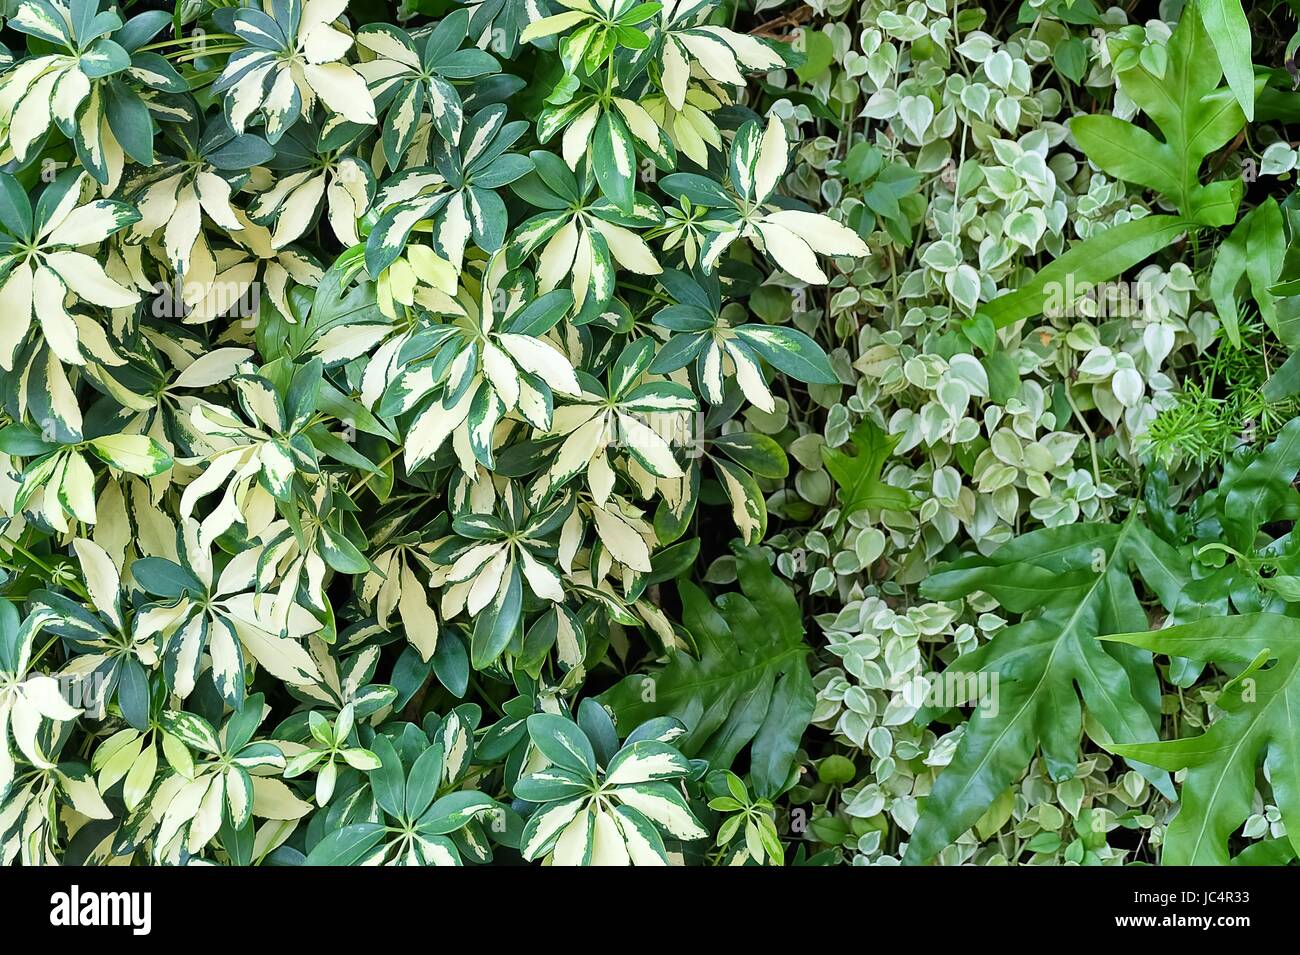 Background Pattern, Beautiful Green Leaves Wall of Polypodium Diversifolium, Schefflera actinophylla, Ferns and Vine Plants. Stock Photo